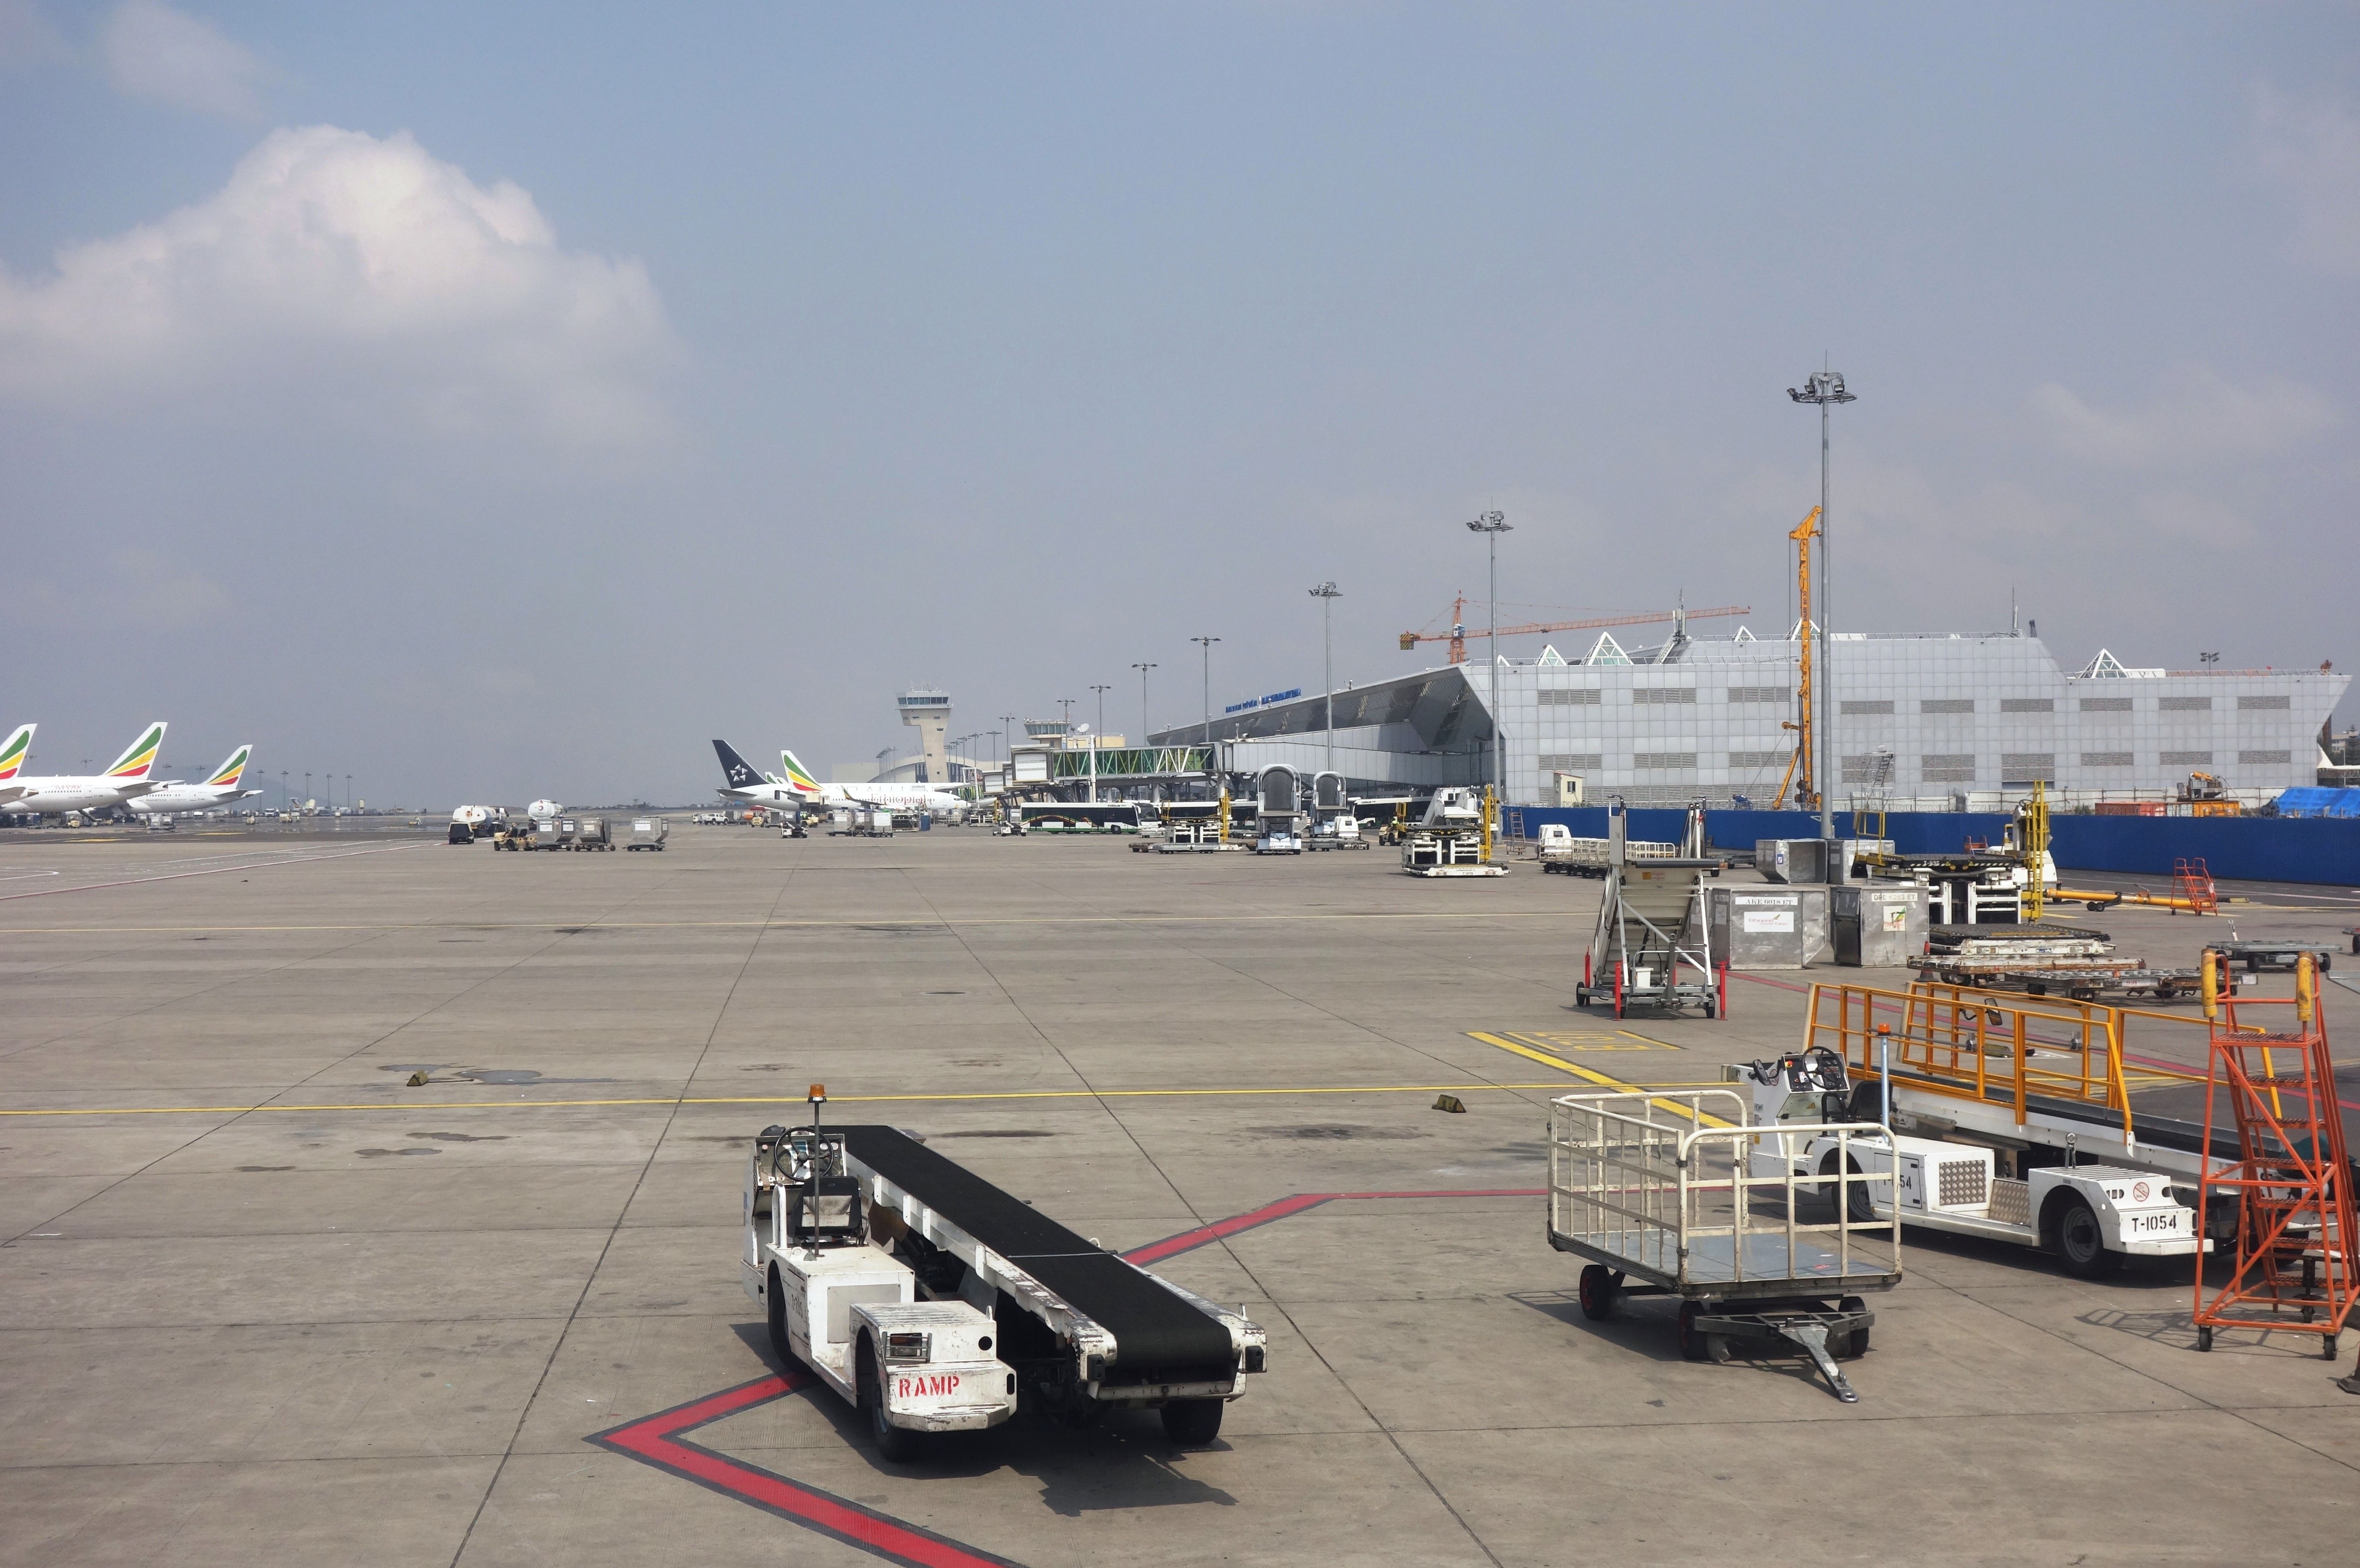 Operations at Addis Ababa Airport